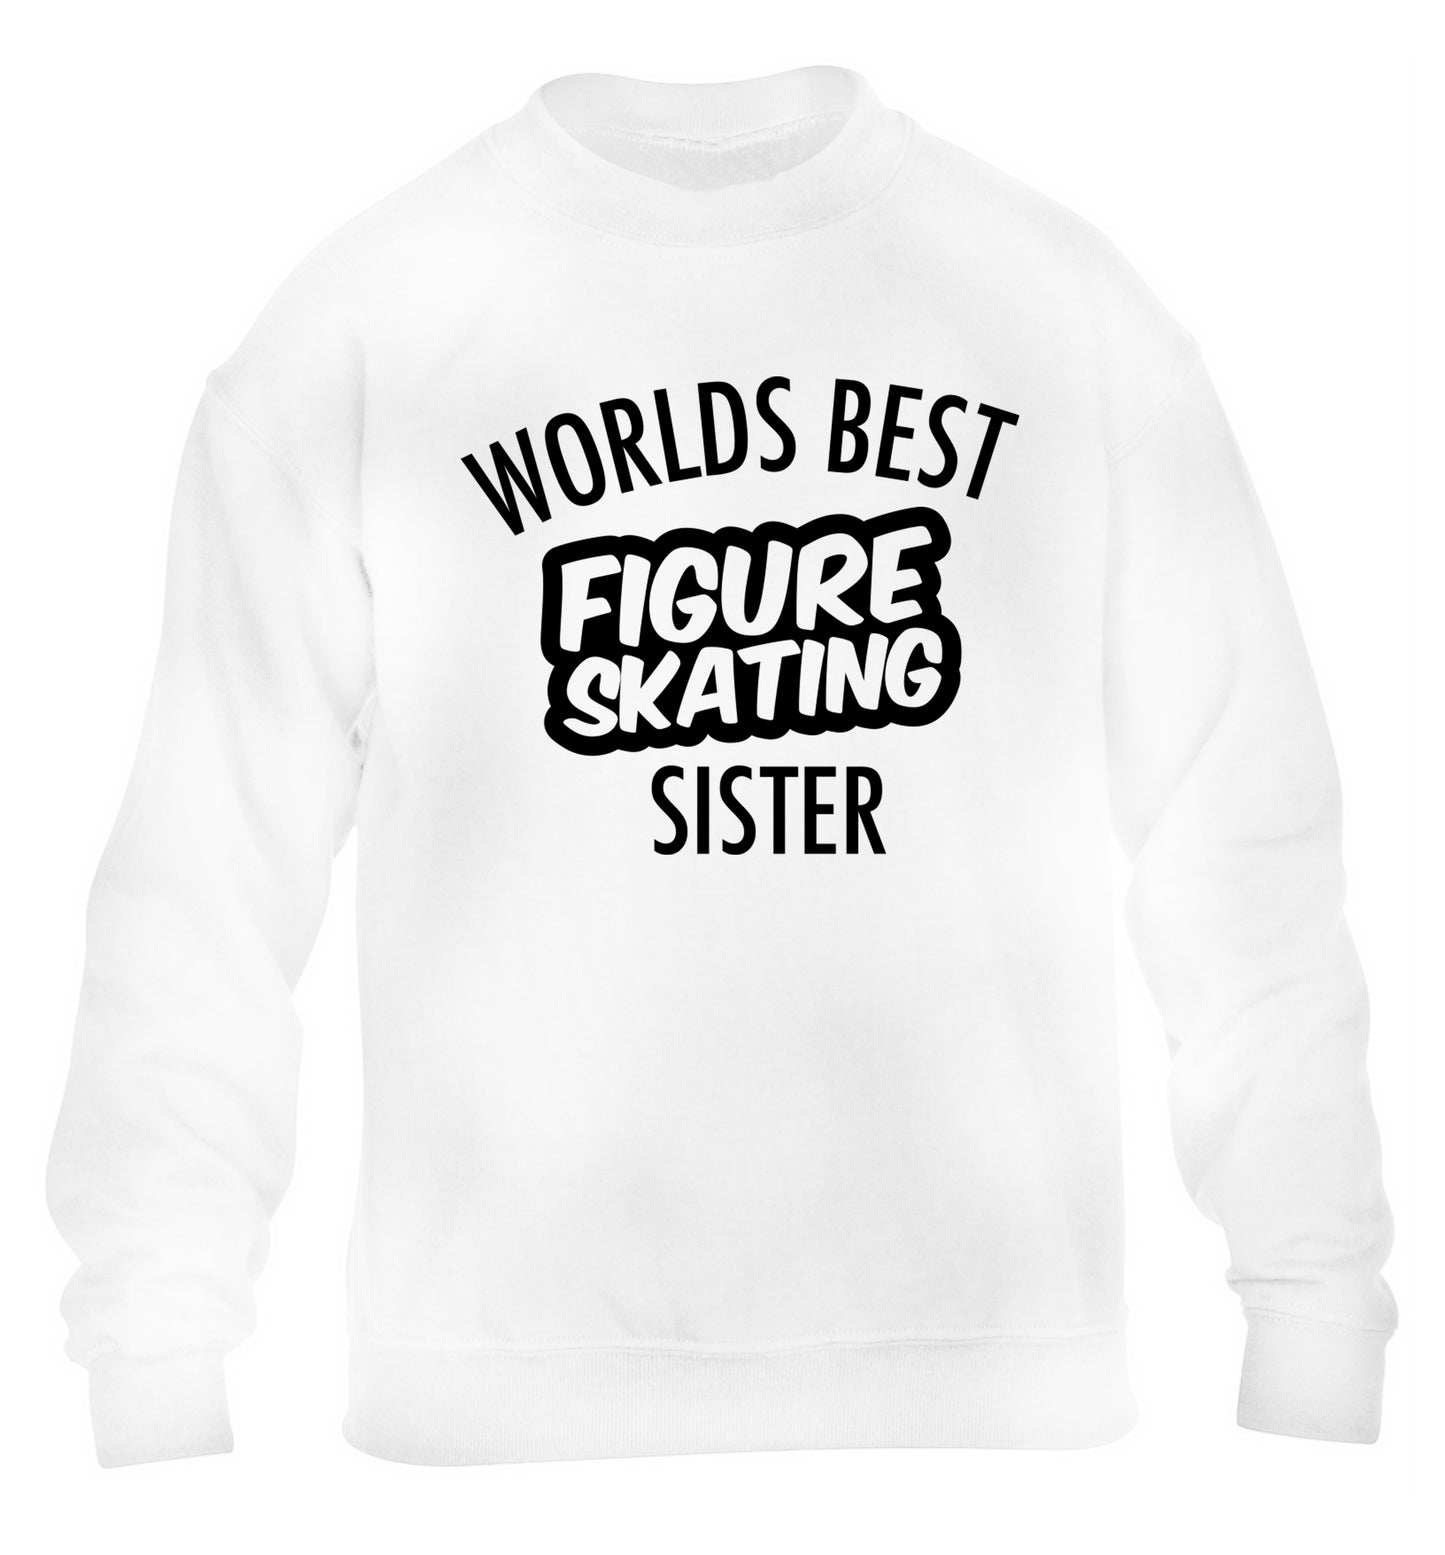 Worlds best figure skating sisterchildren's white sweater 12-14 Years